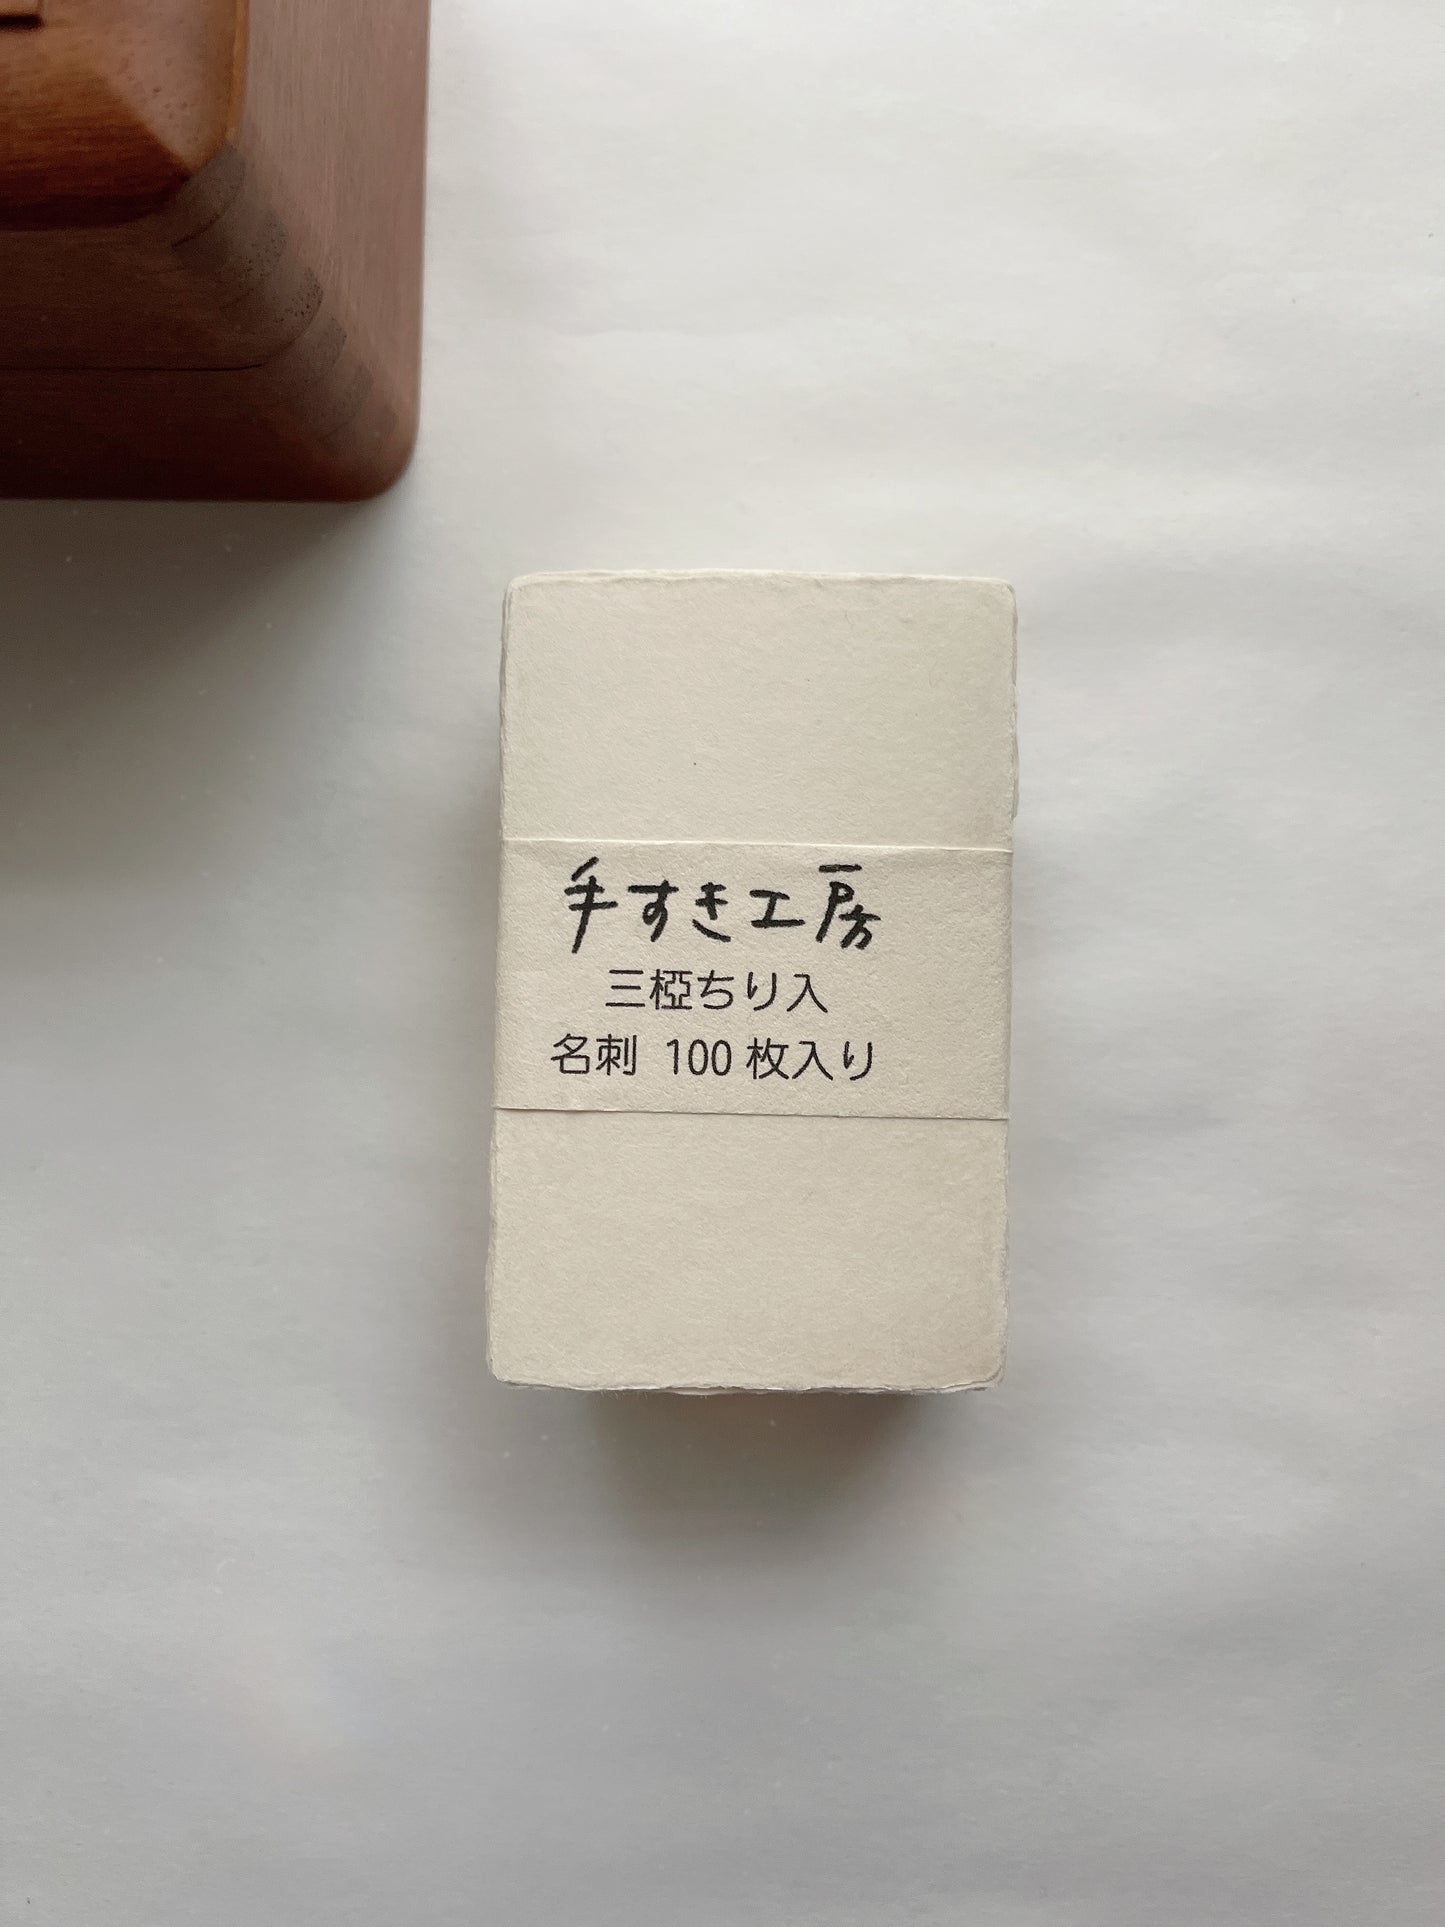 Awagami Factory Handmade Paper | Soft Cream White